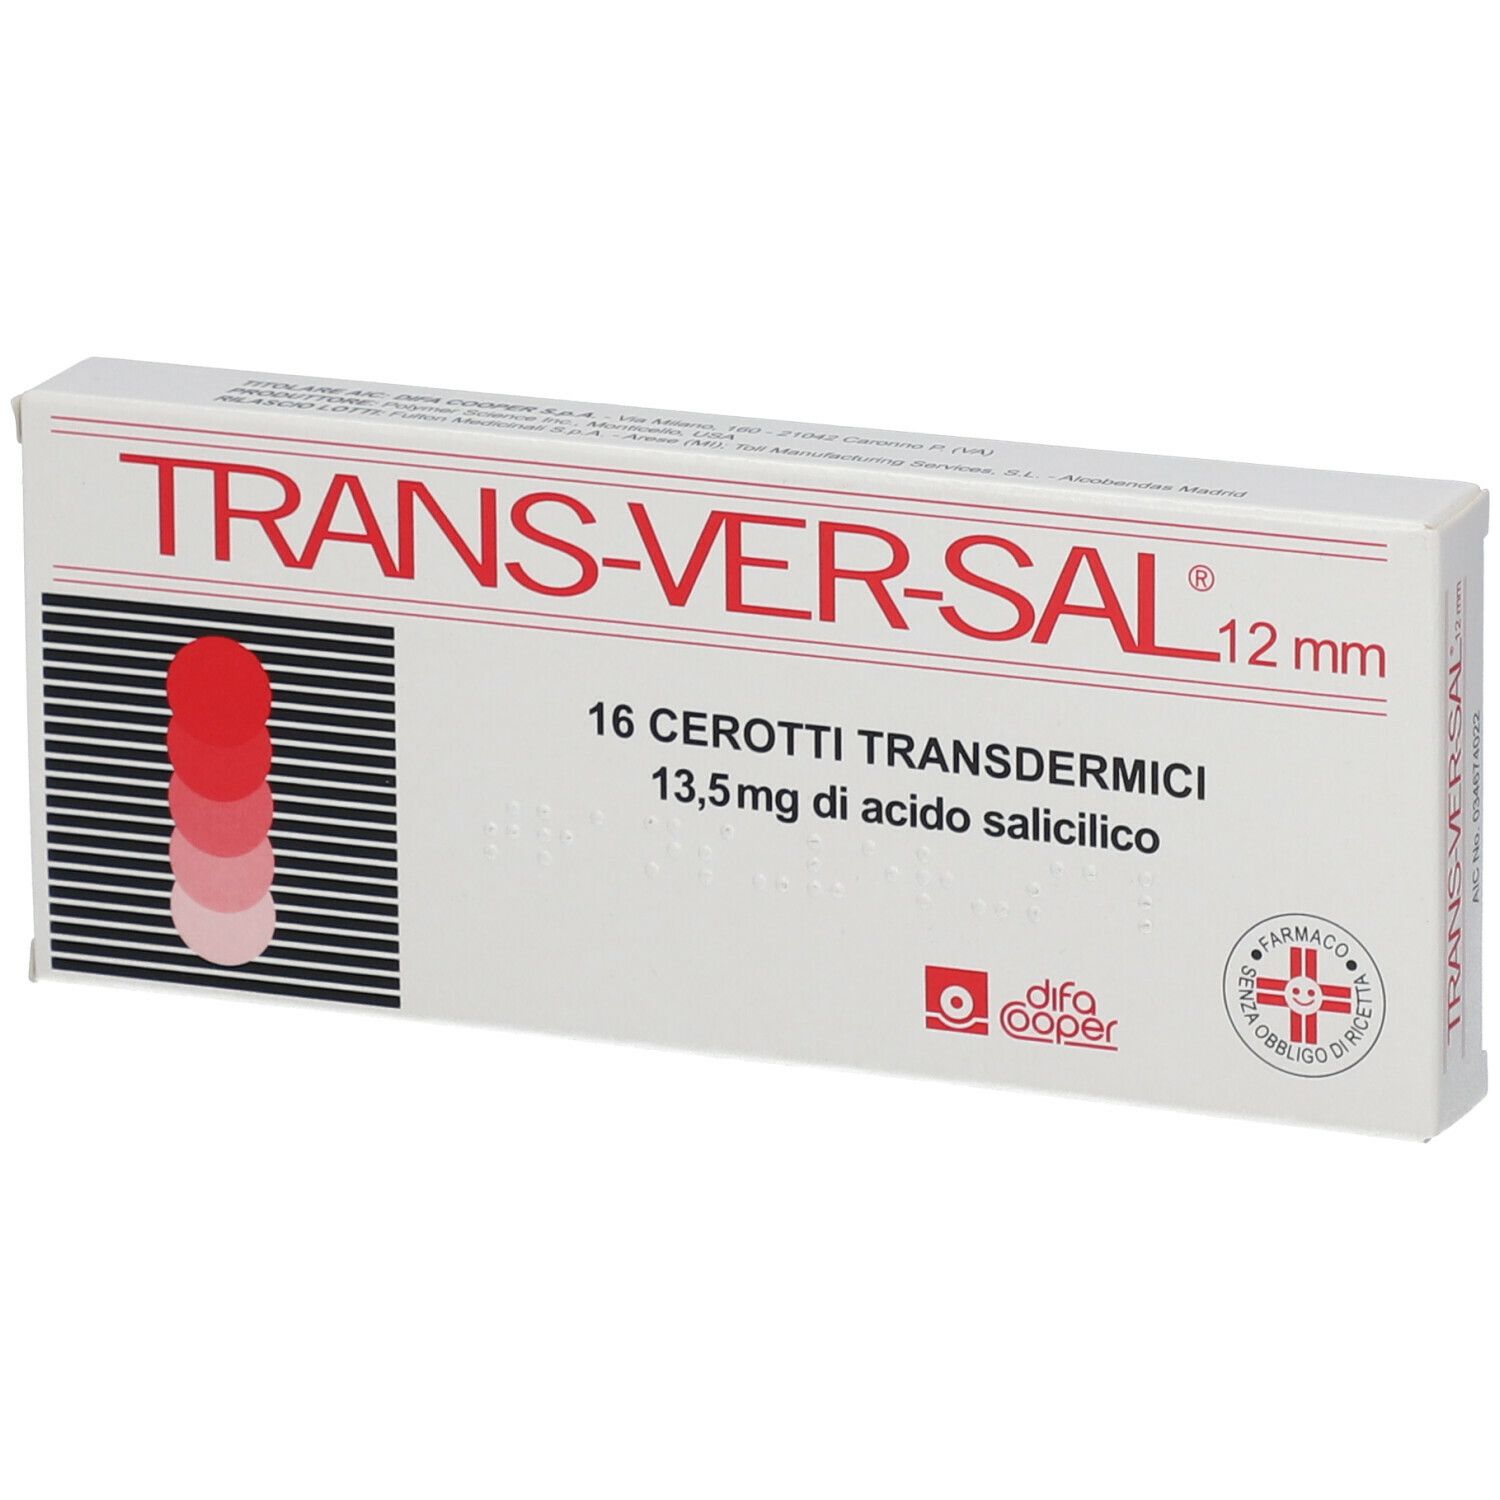 TRANS VER SAL® 16 Cerotti Transdermici 13,5 mg 12 mm